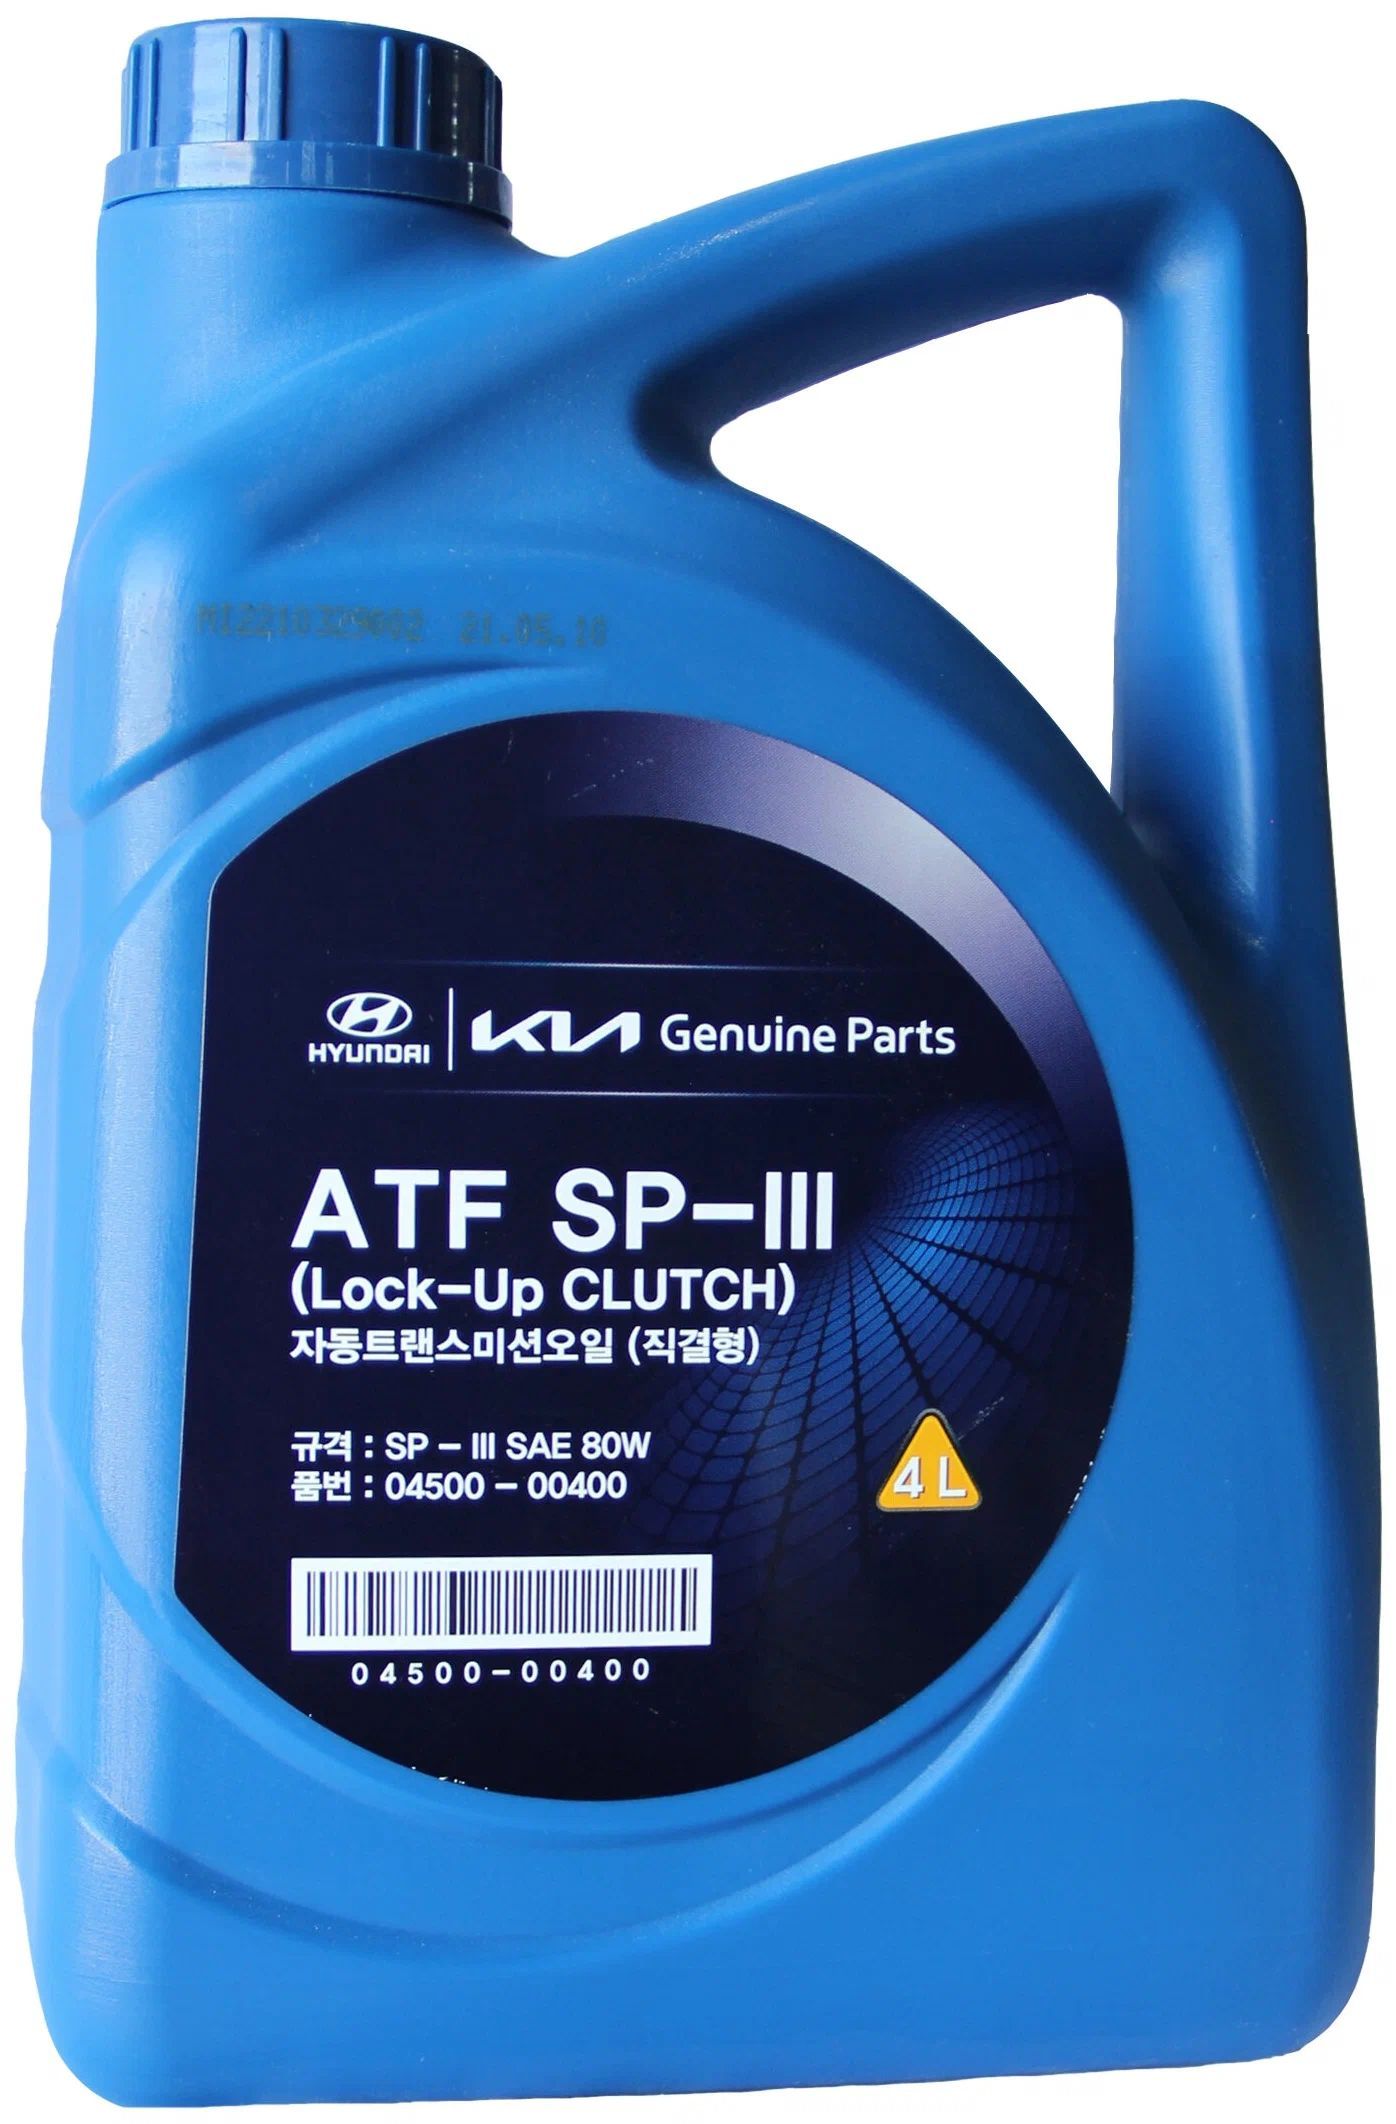 Atf sp3 4л. Хендай sp4 4 литра артикул.